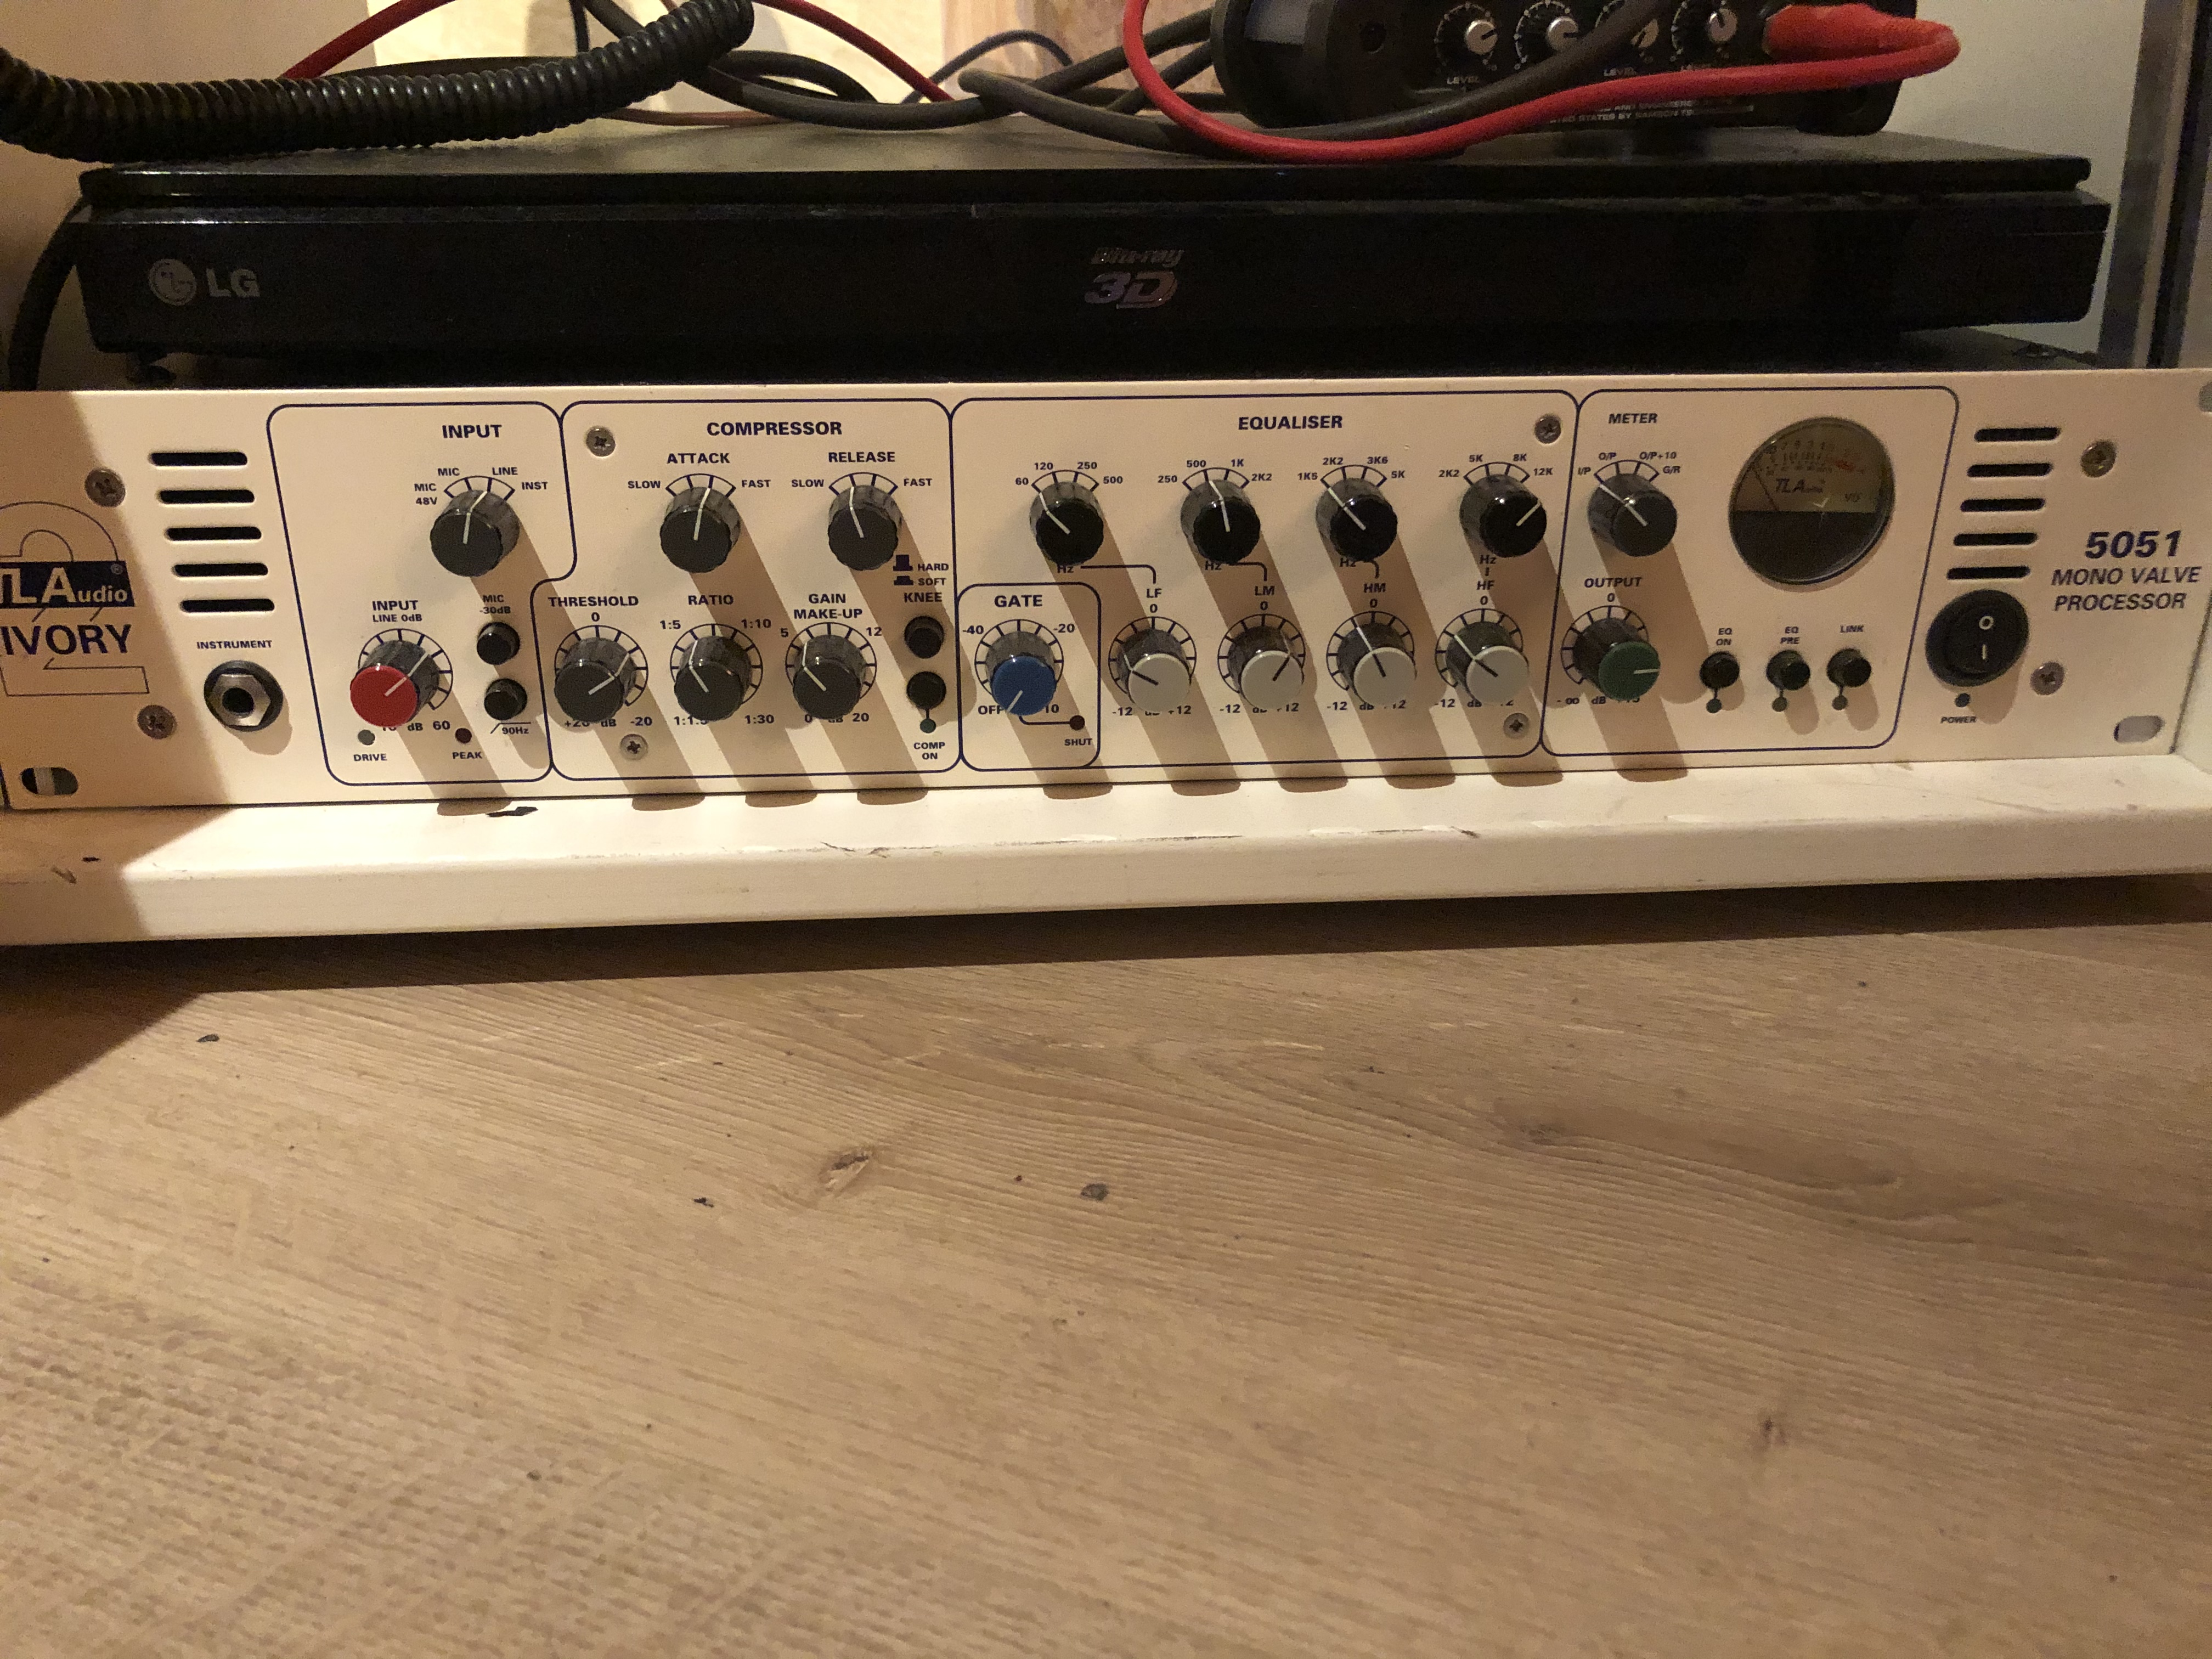 TL Audio Ivory VP-5051 初期型 レア - 楽器/器材